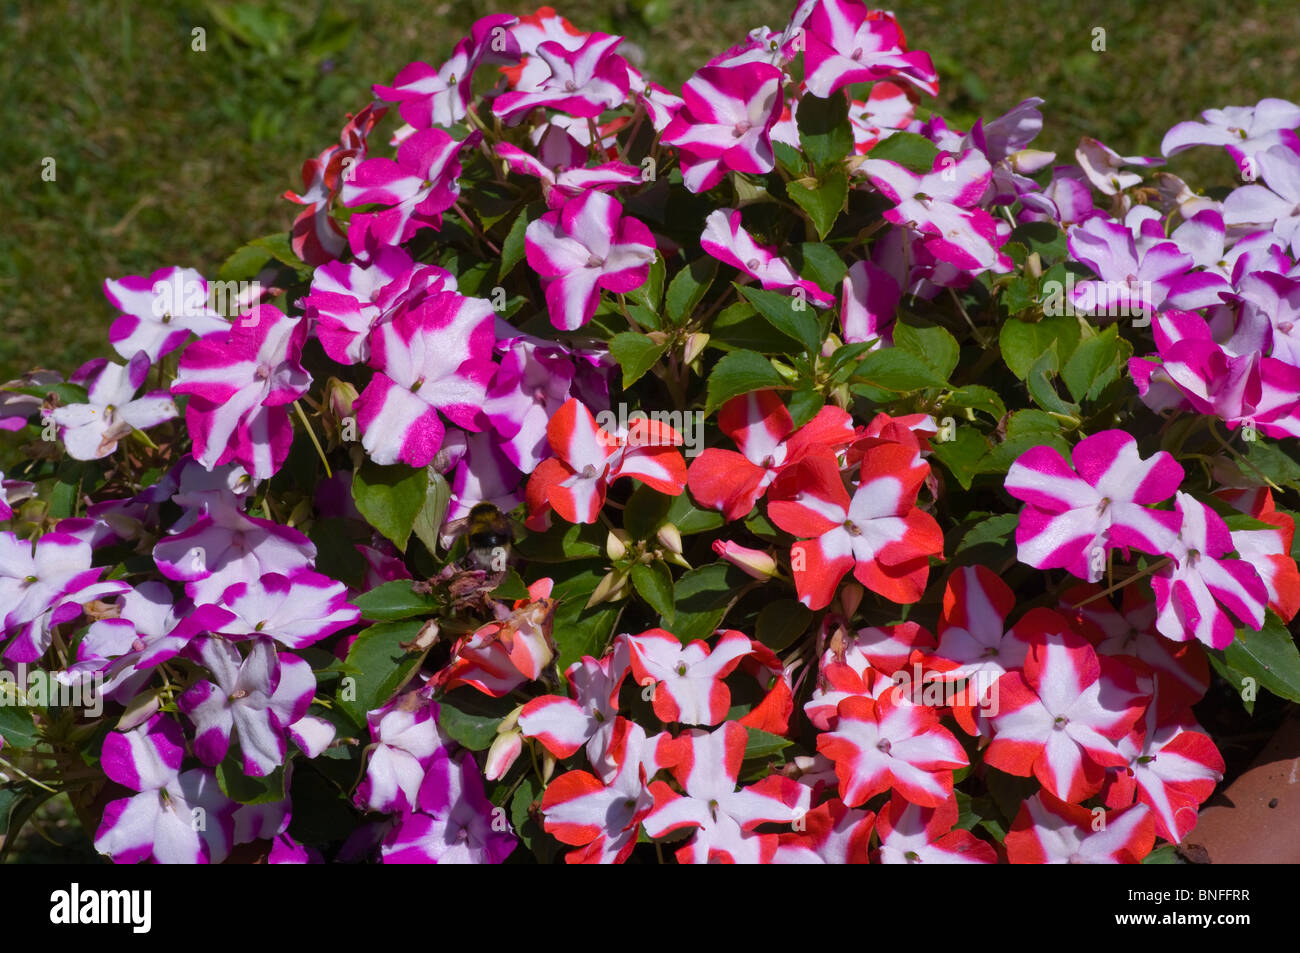 Multi Coloured Impatiens Bedding Plants Stock Photo